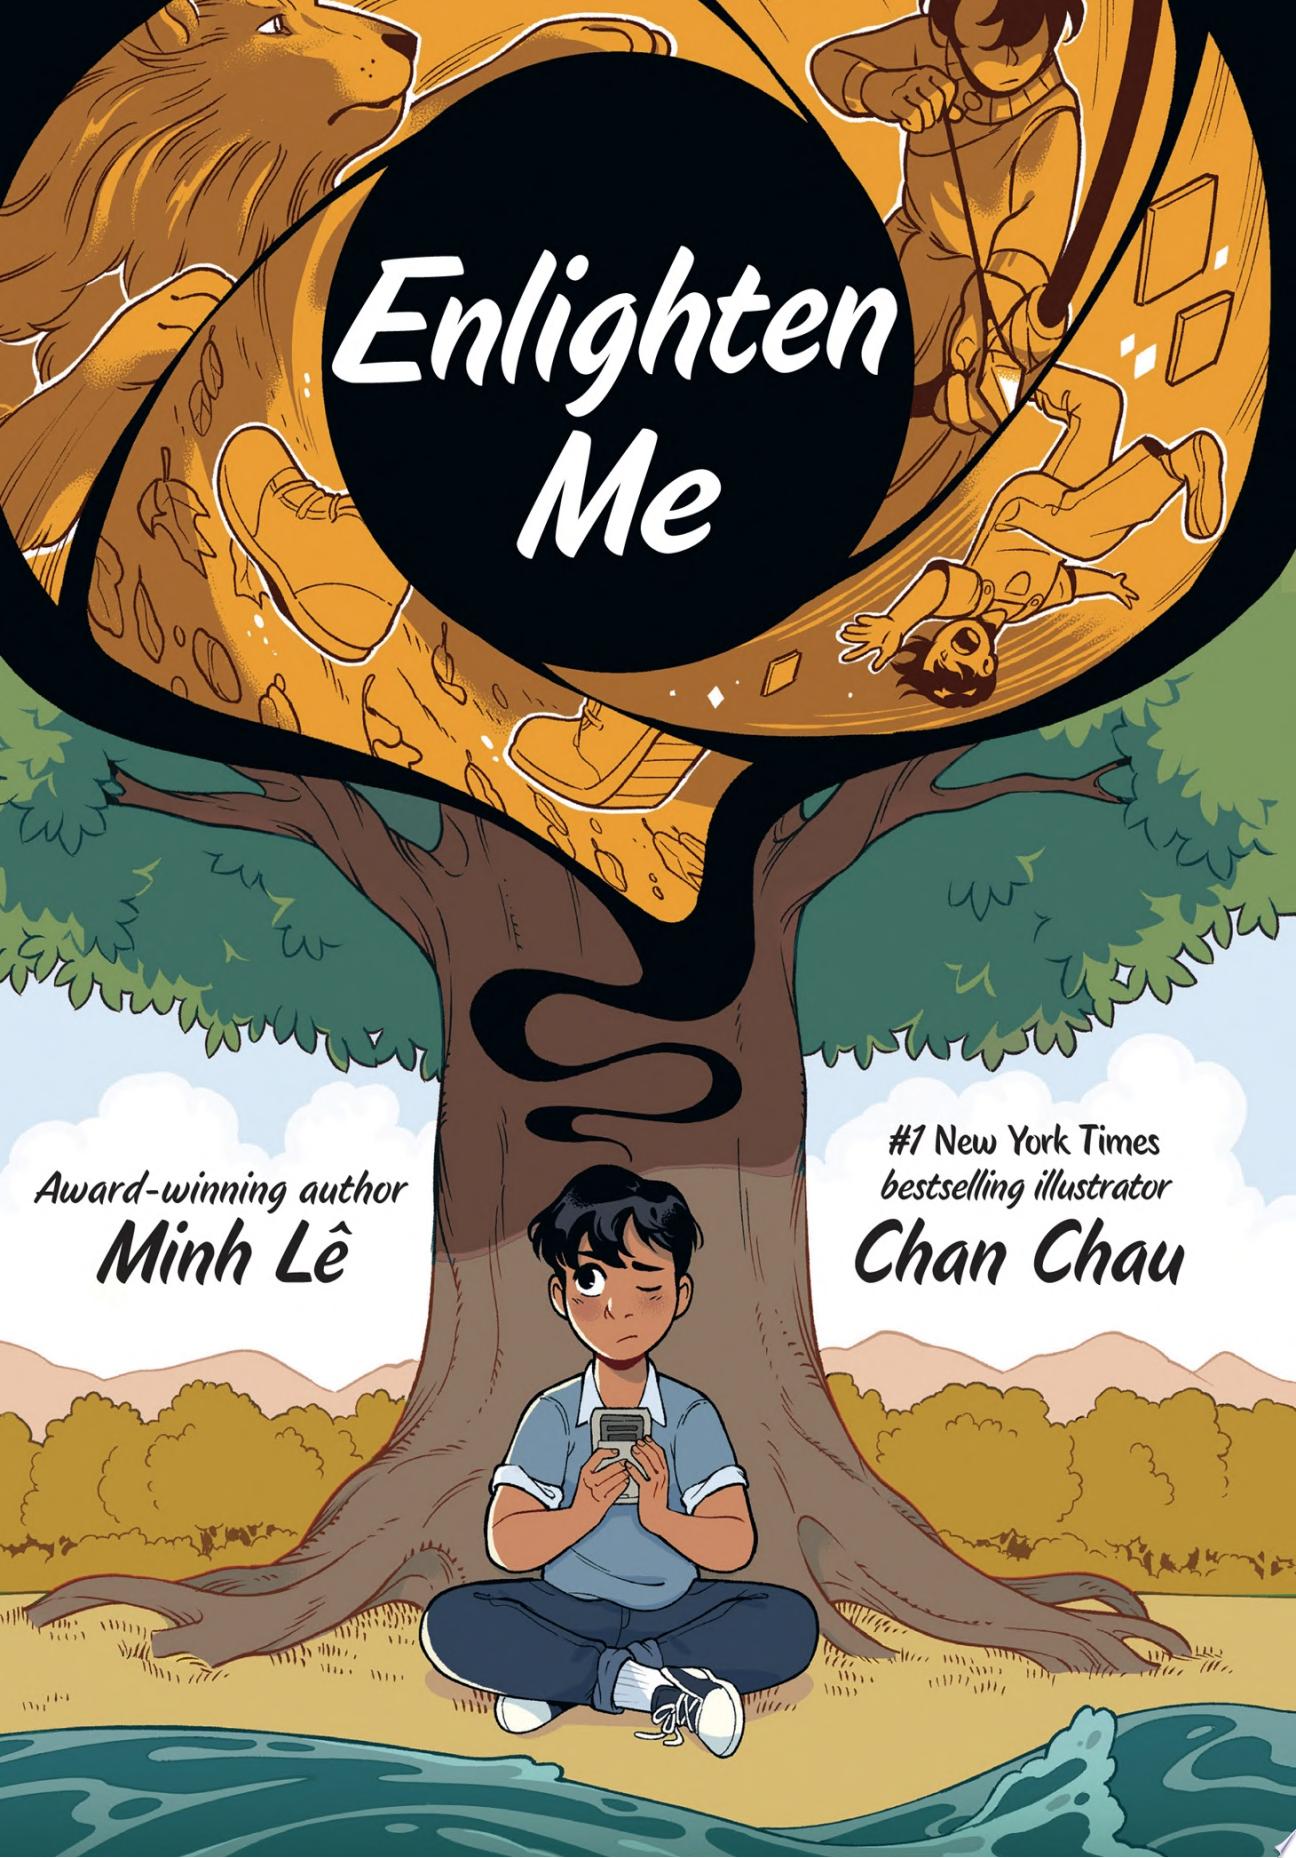 Image for "Enlighten Me (A Graphic Novel)"